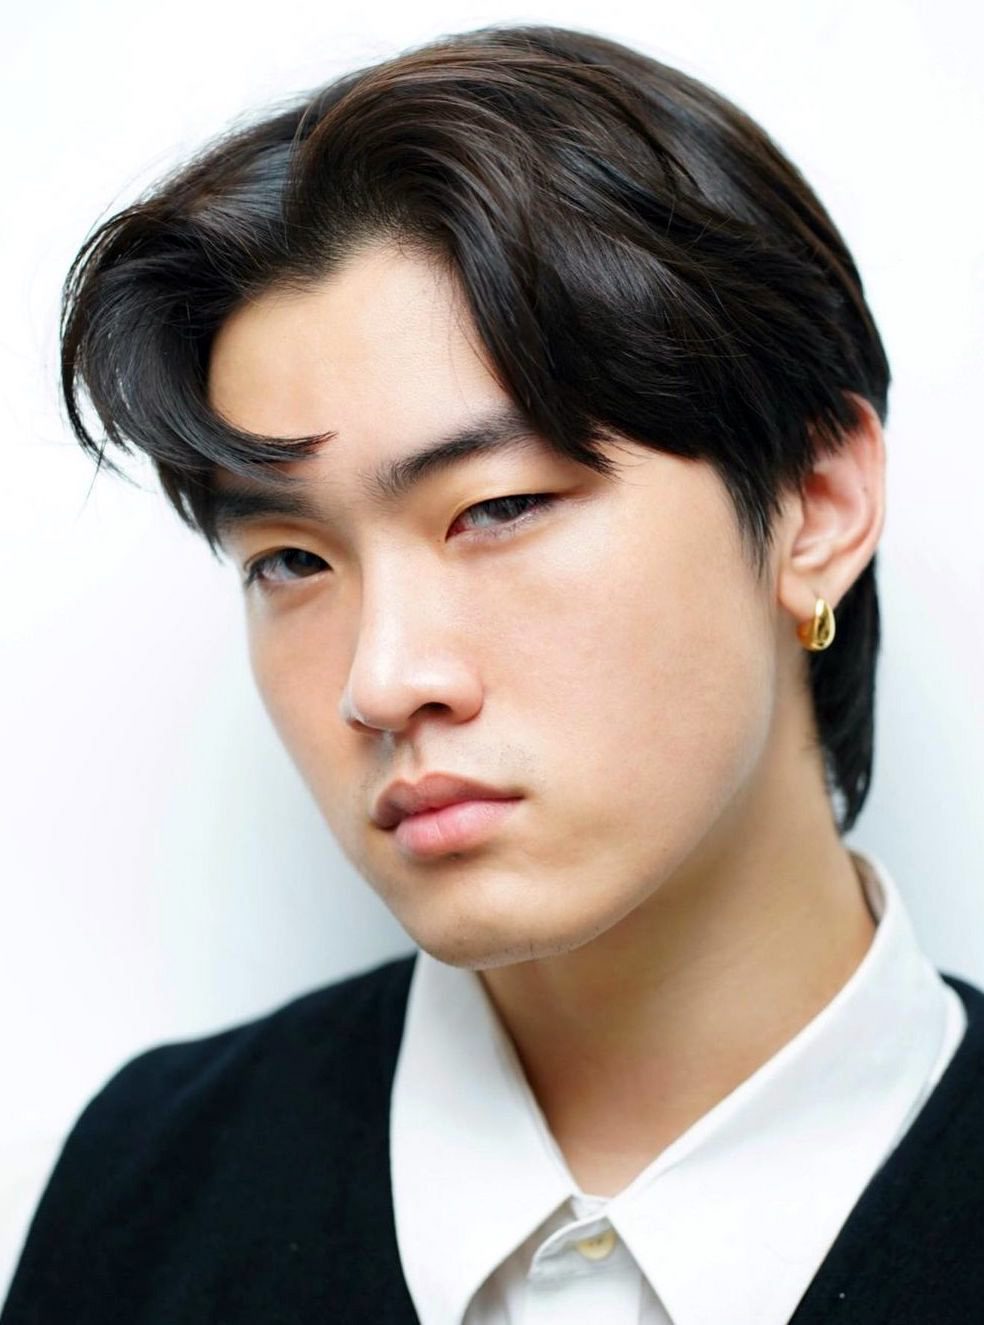 Two Block Haircut - The Korean undercut - ULO Lifestyle - The Blog